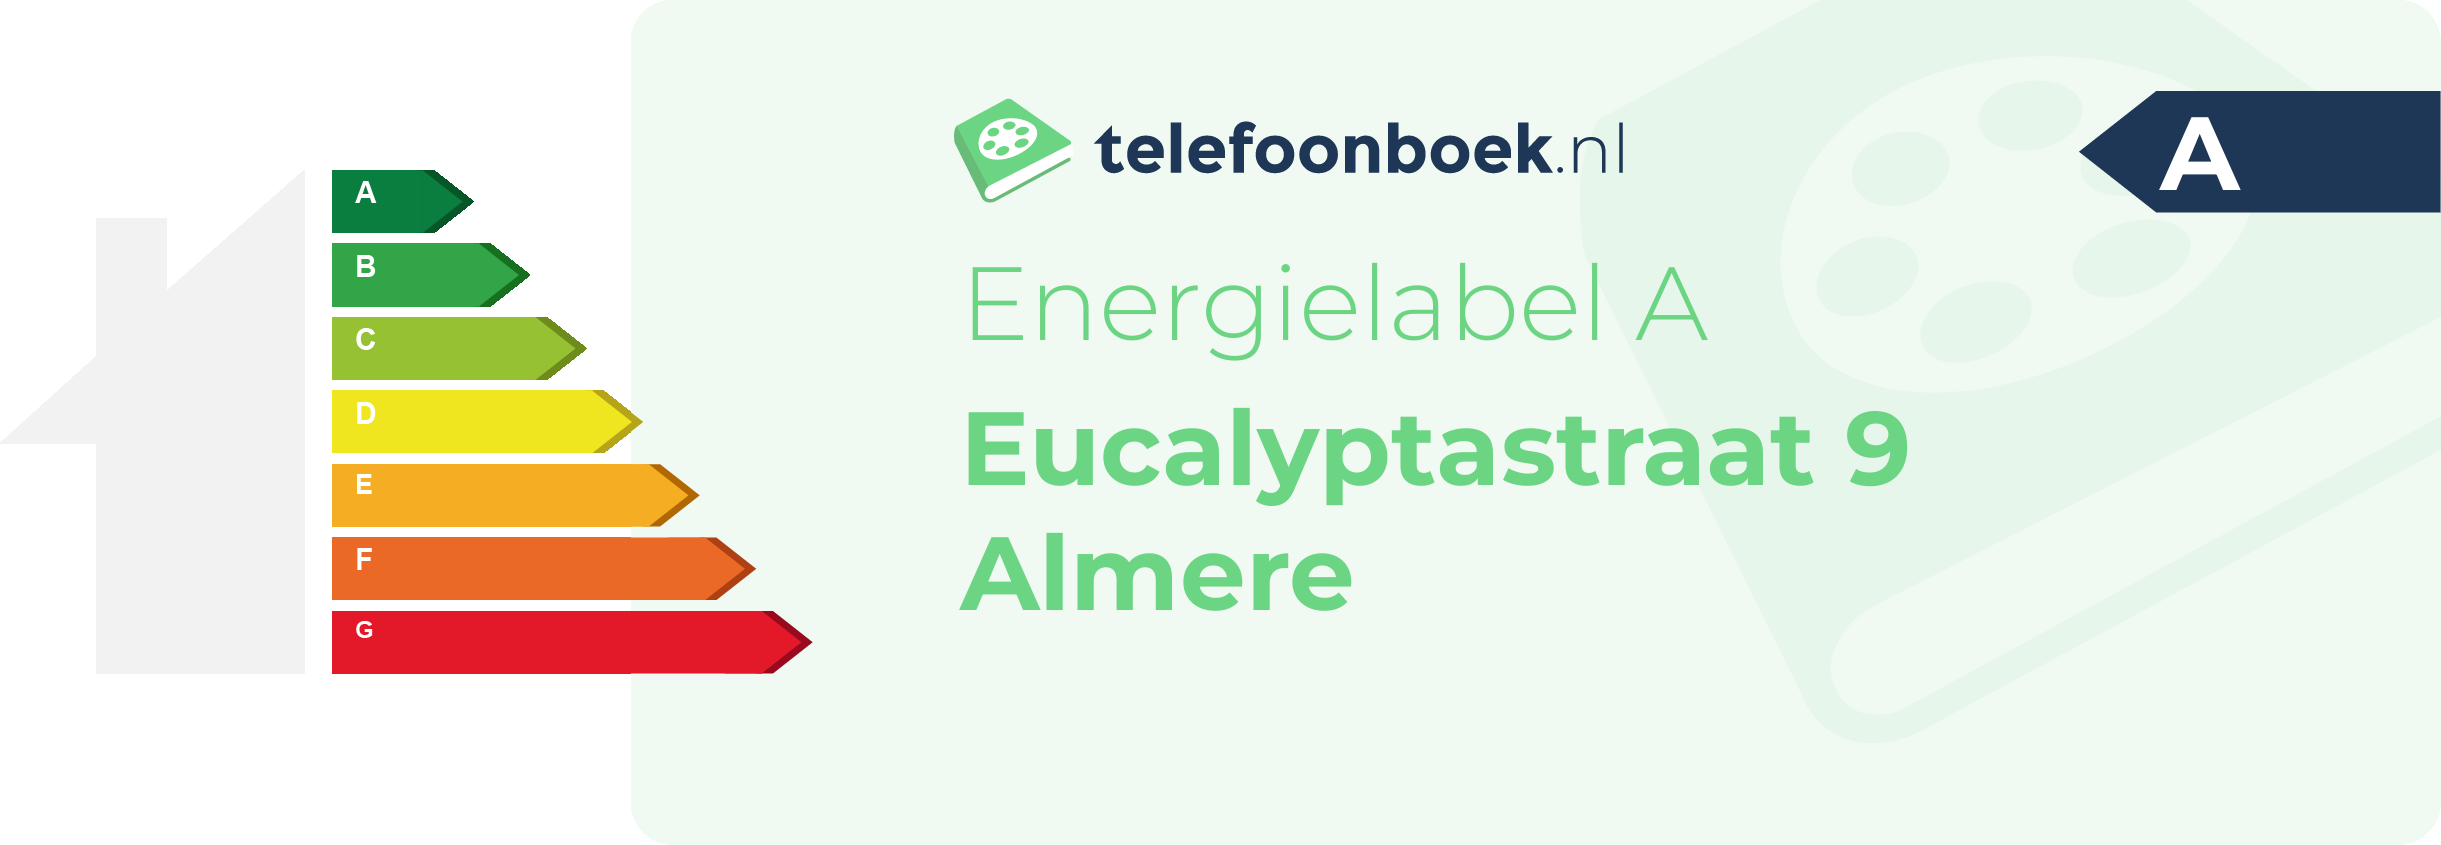 Energielabel Eucalyptastraat 9 Almere